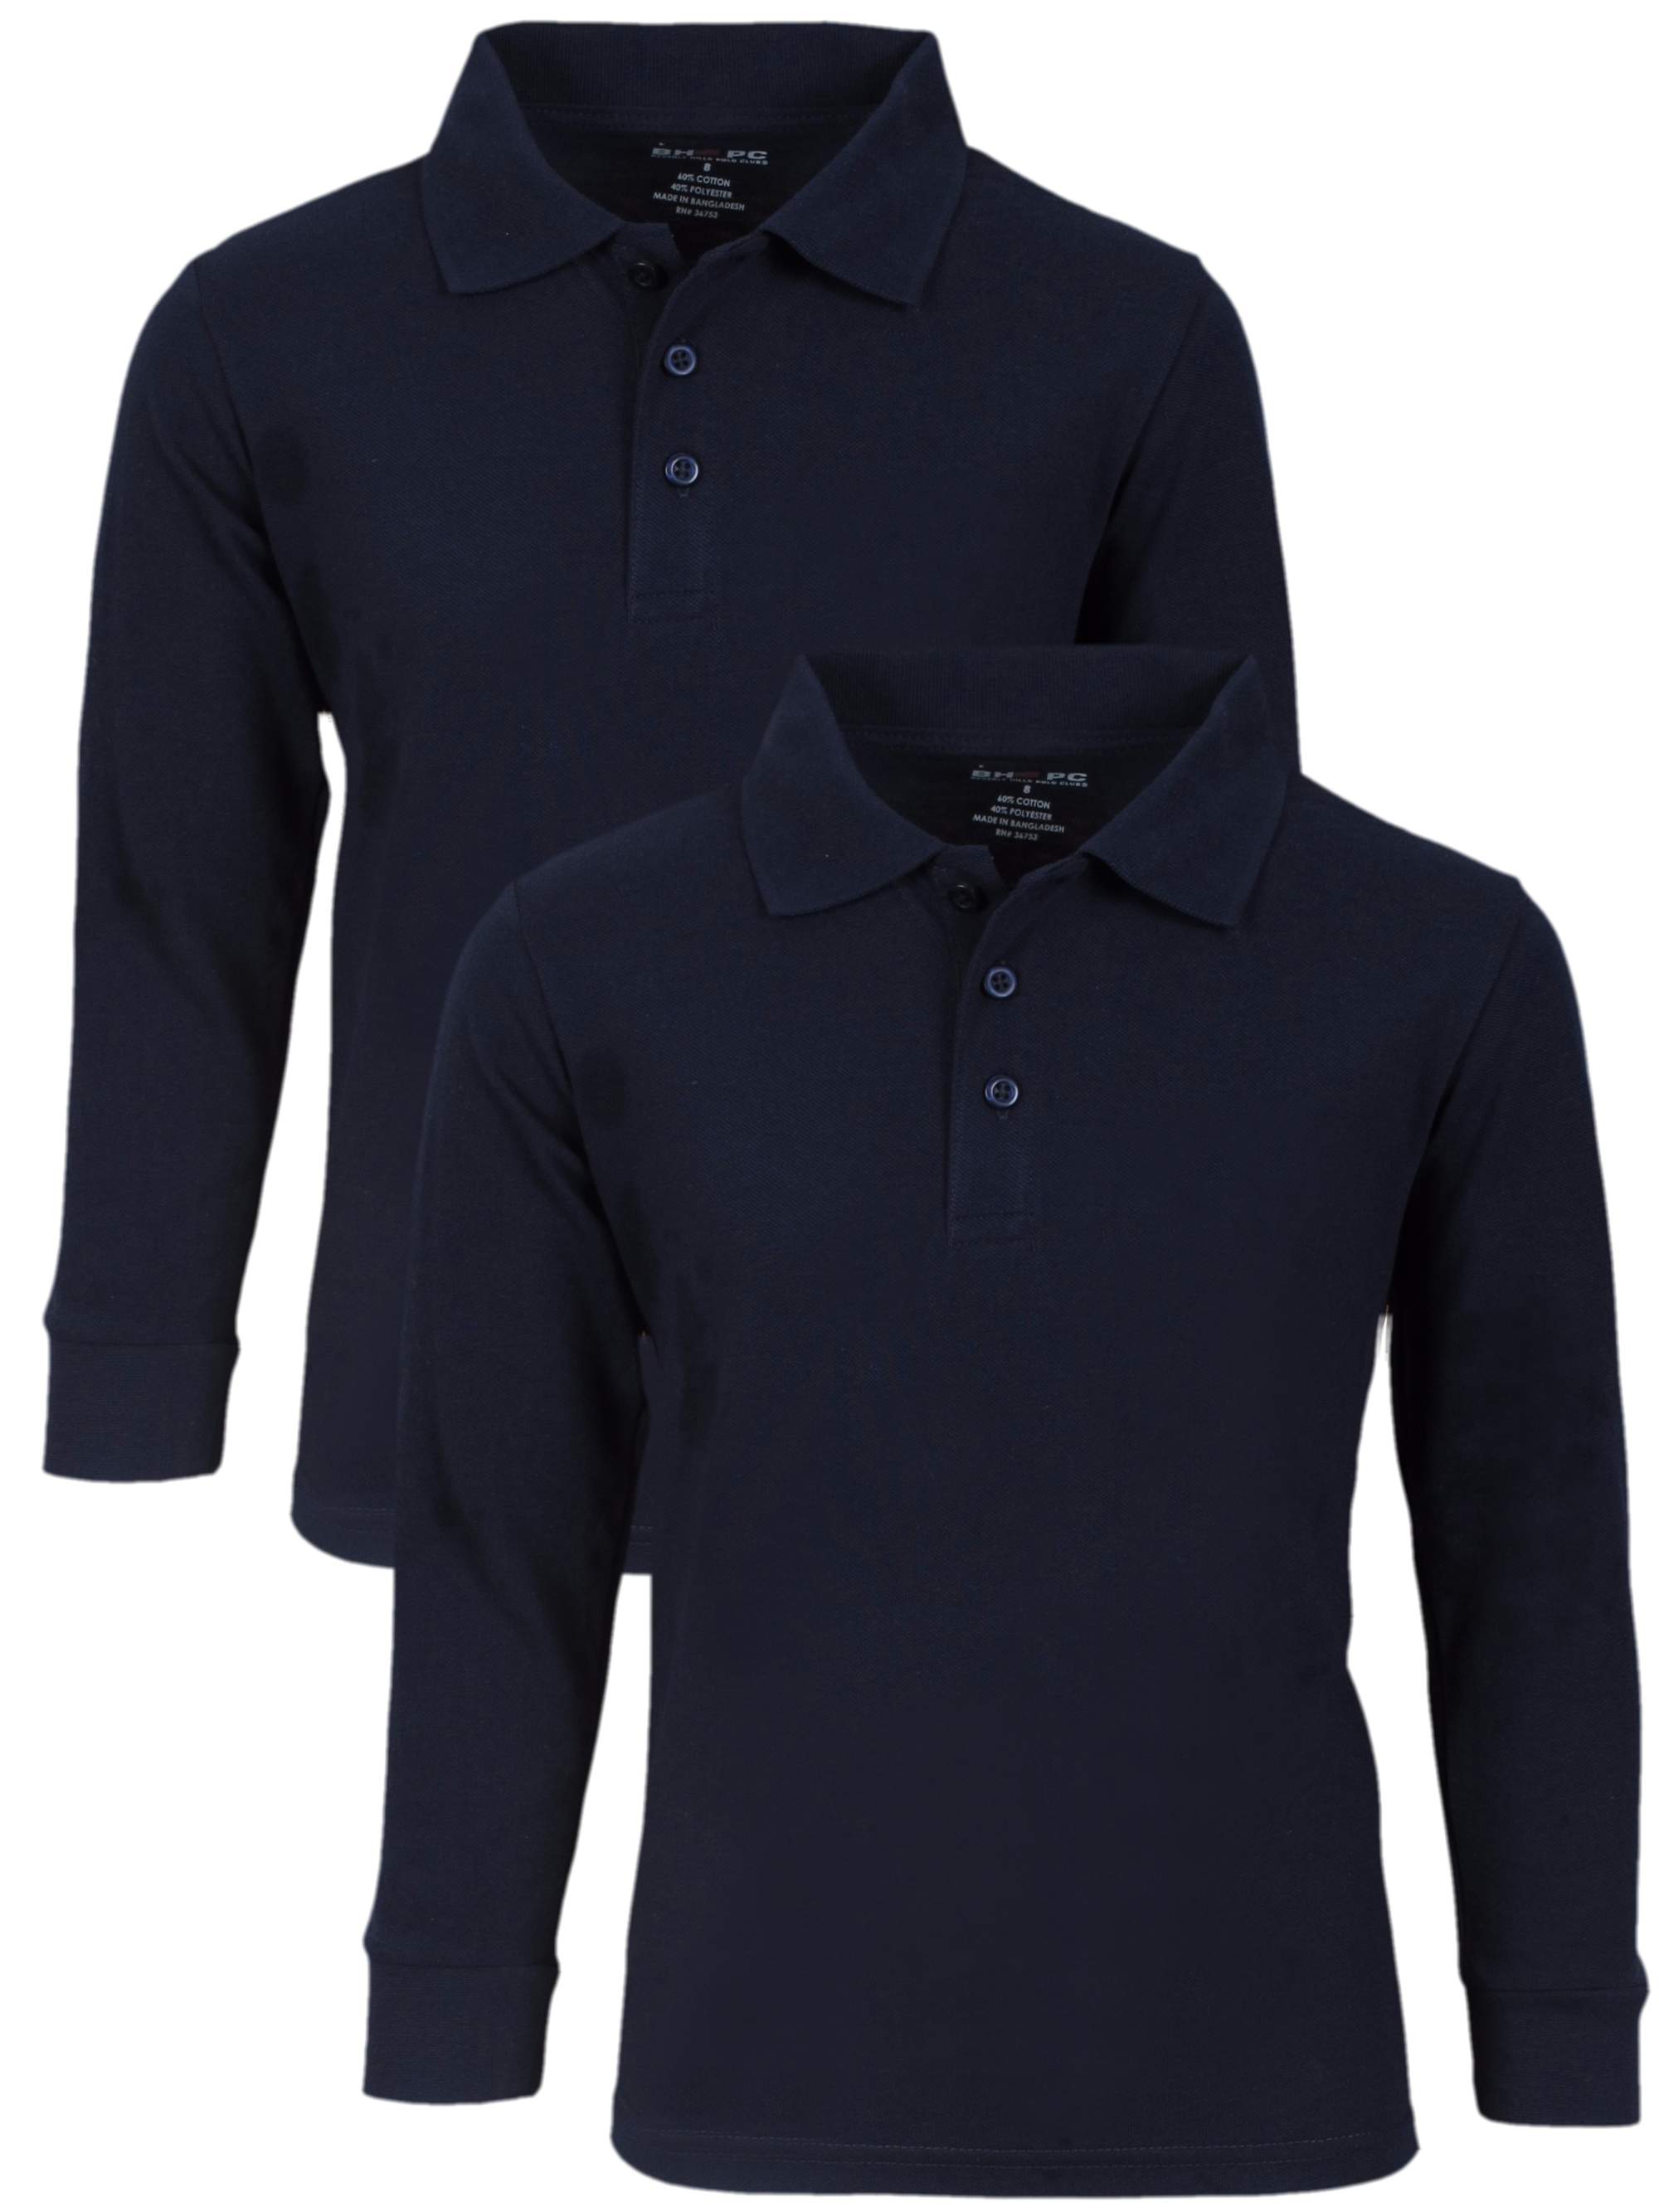 Beverly Hills Polo Club Boys 4-14 School Uniform 2 Pack Long Sleeve Pique Polo Shirt - image 1 of 2